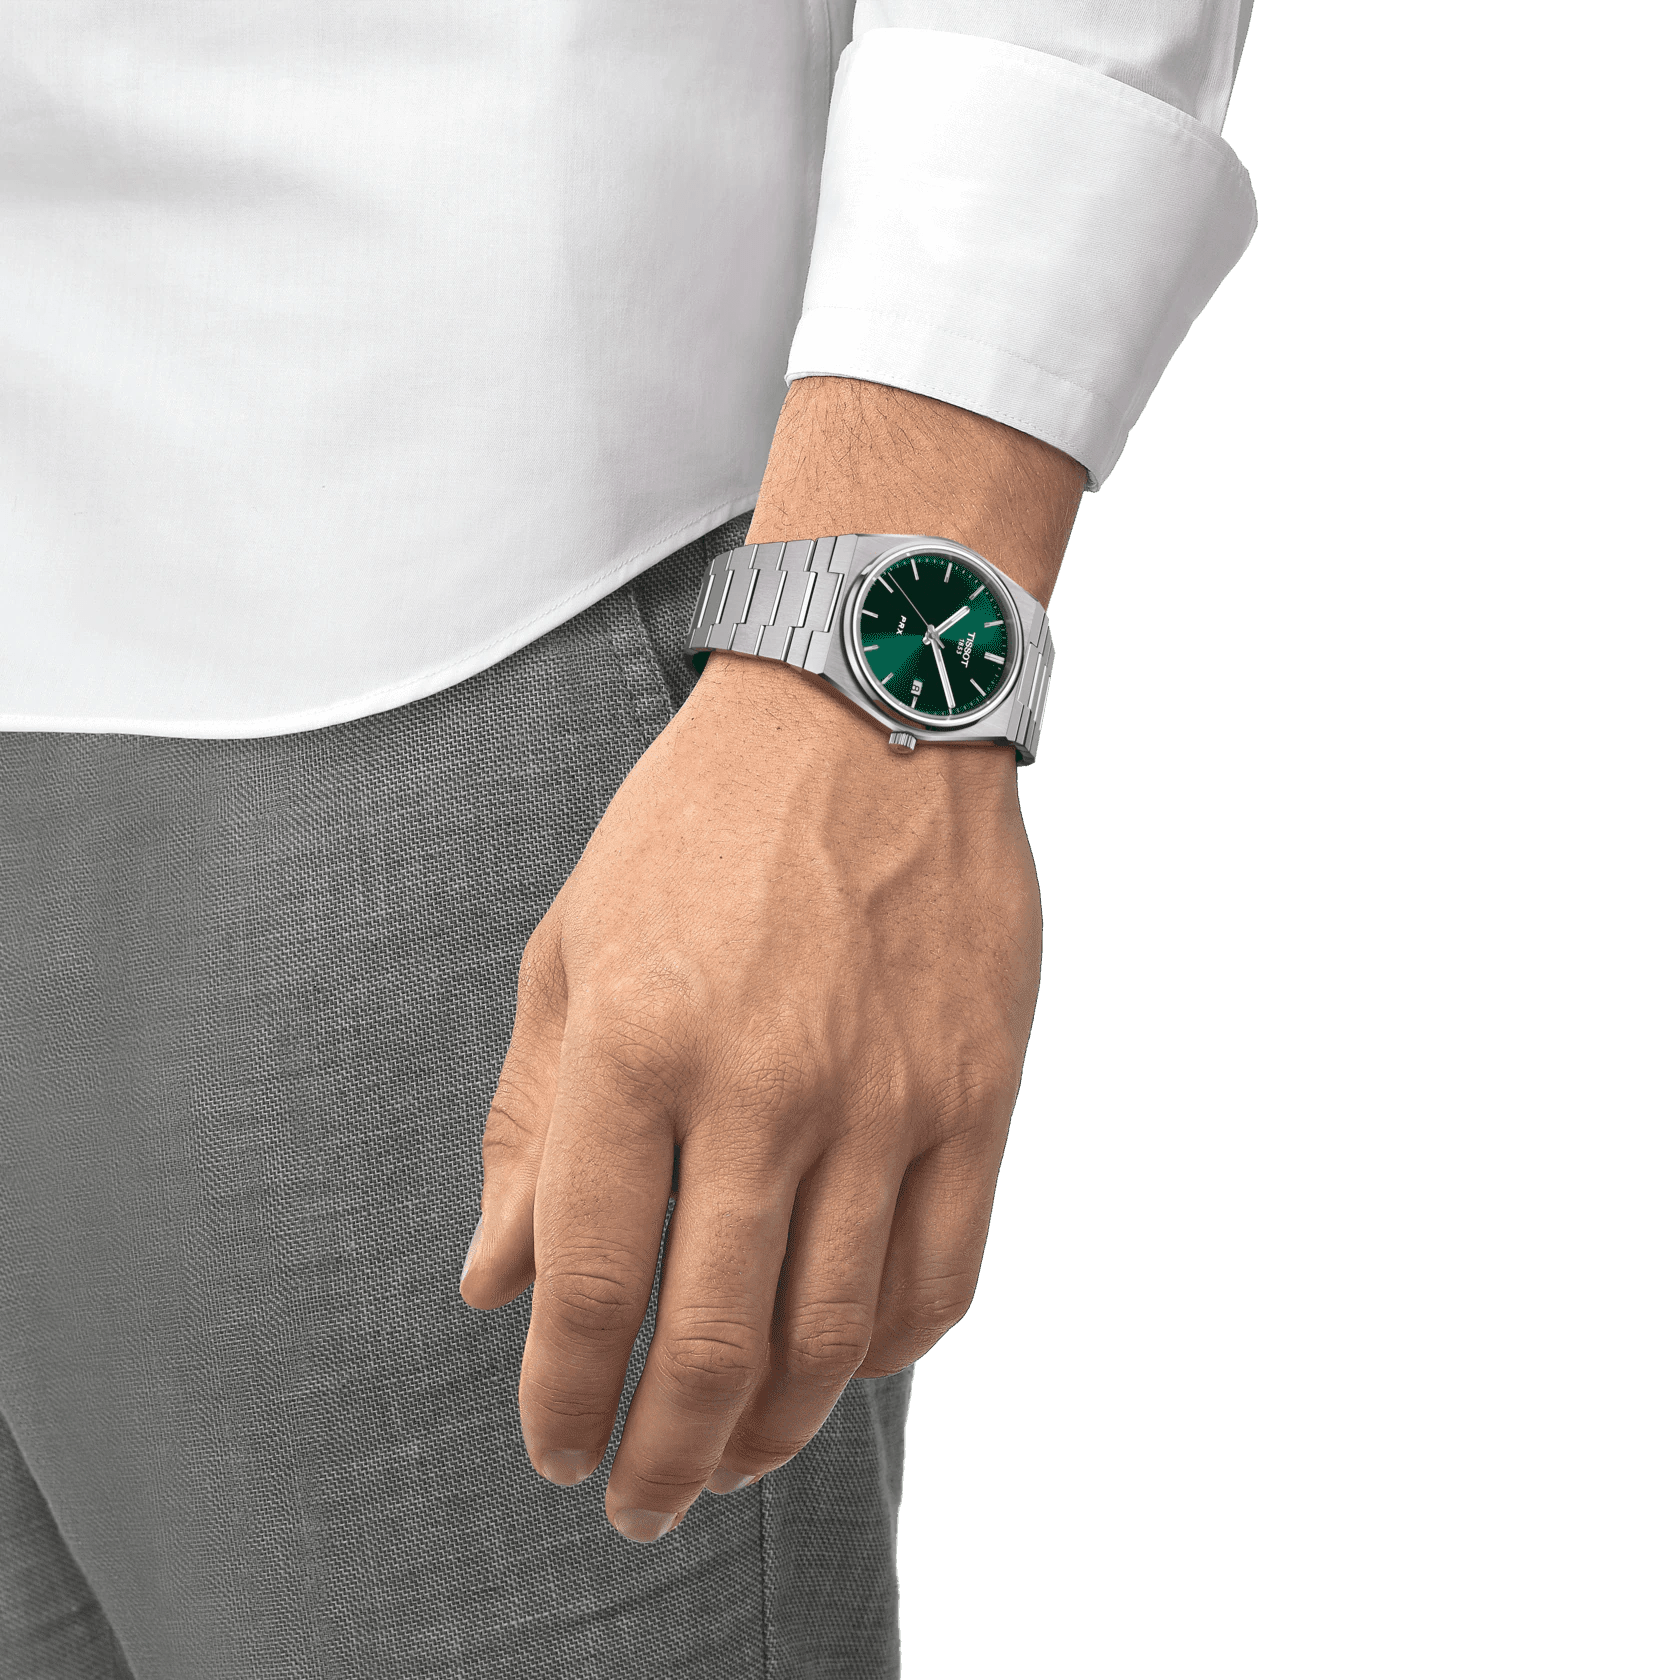 Tissot PRX Slim Green Dial Stainless Steel Men's Watch T1374101109100